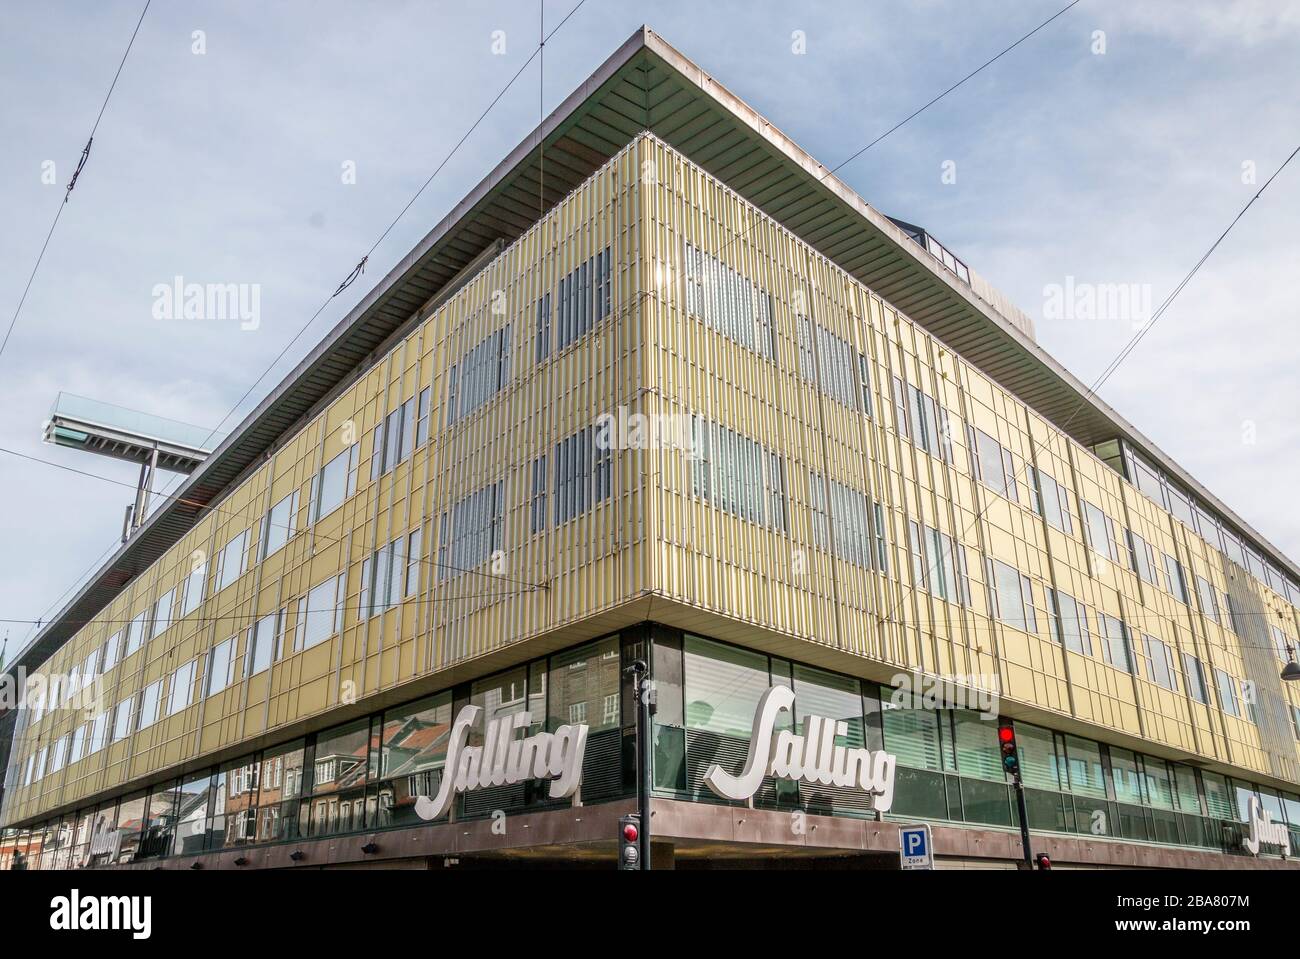 Aarhus, Denmark - 24 March 2020: The logo of the Salling building in Aarhus. Stock Photo